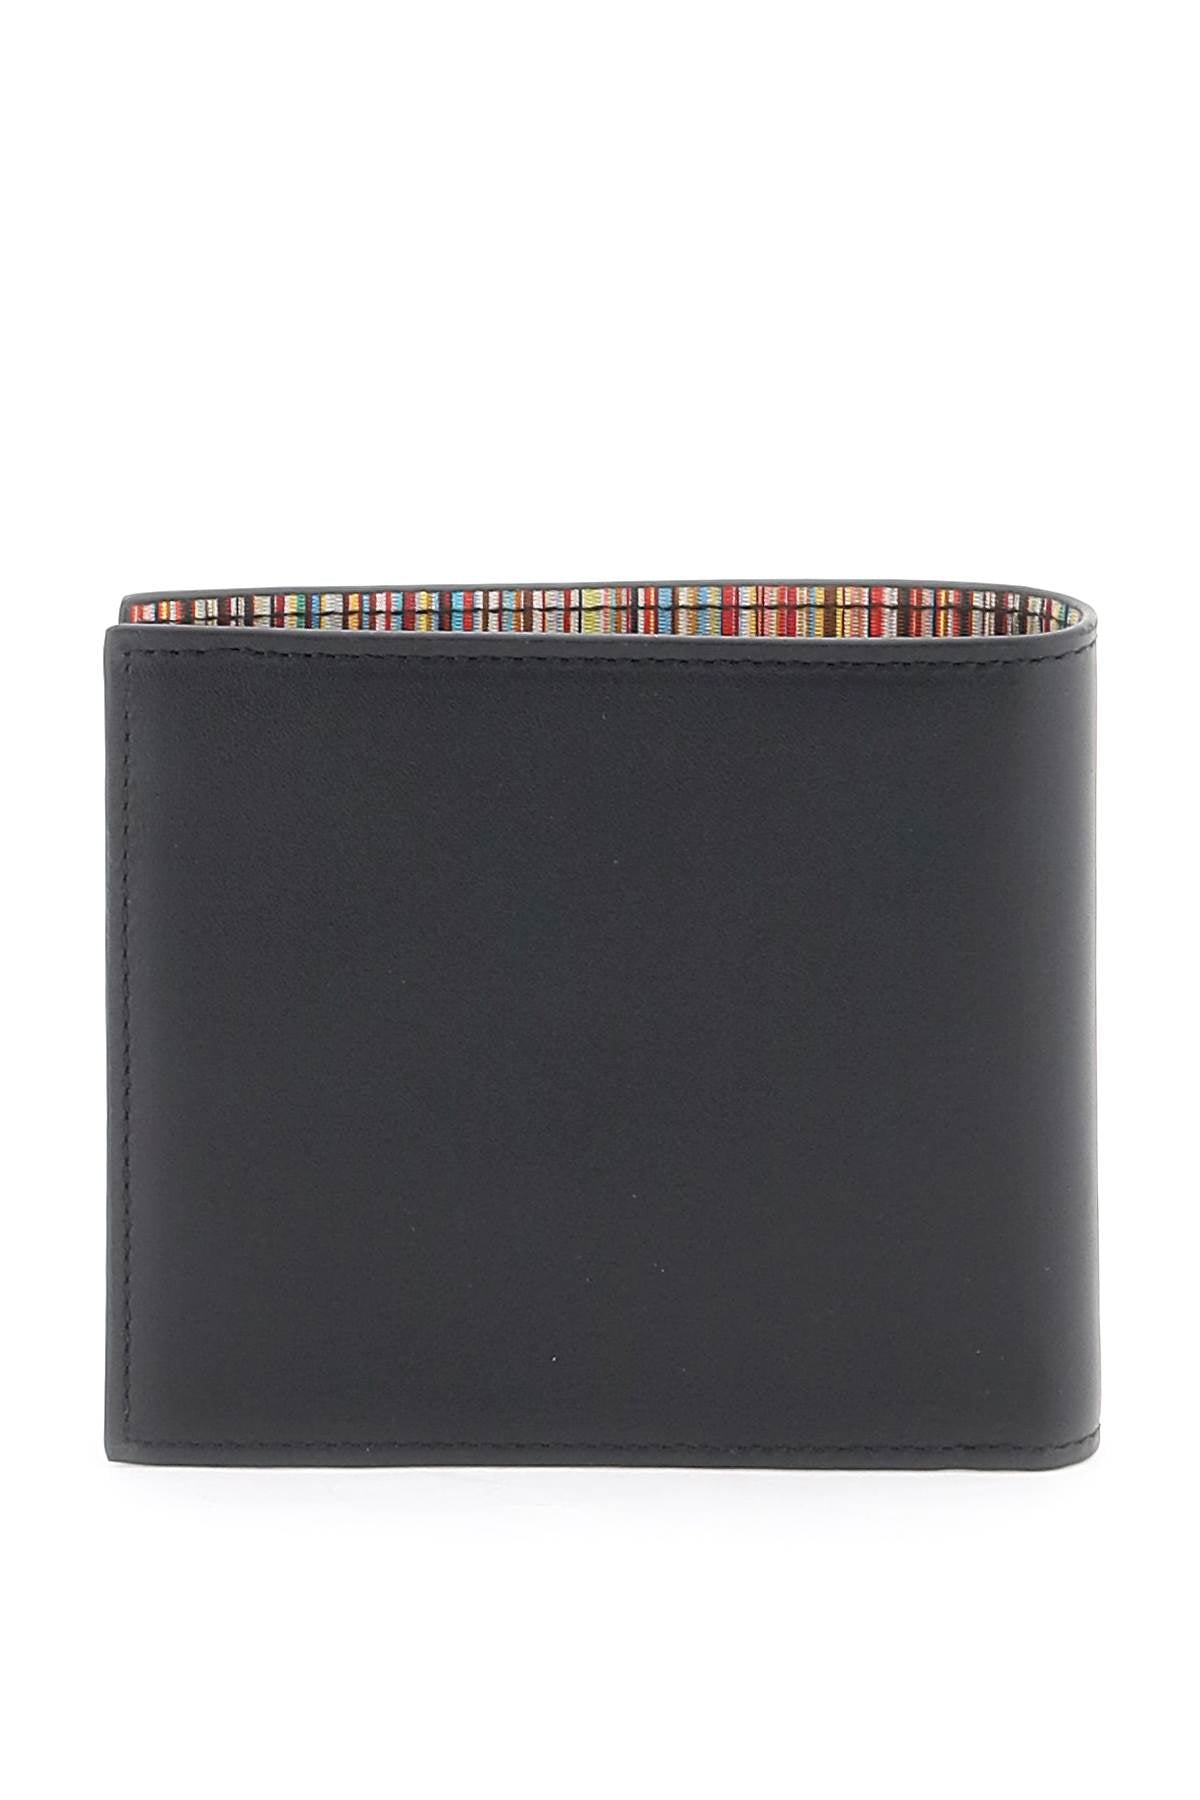 Paul Smith Signature Stripe Bifold Wallet   Black